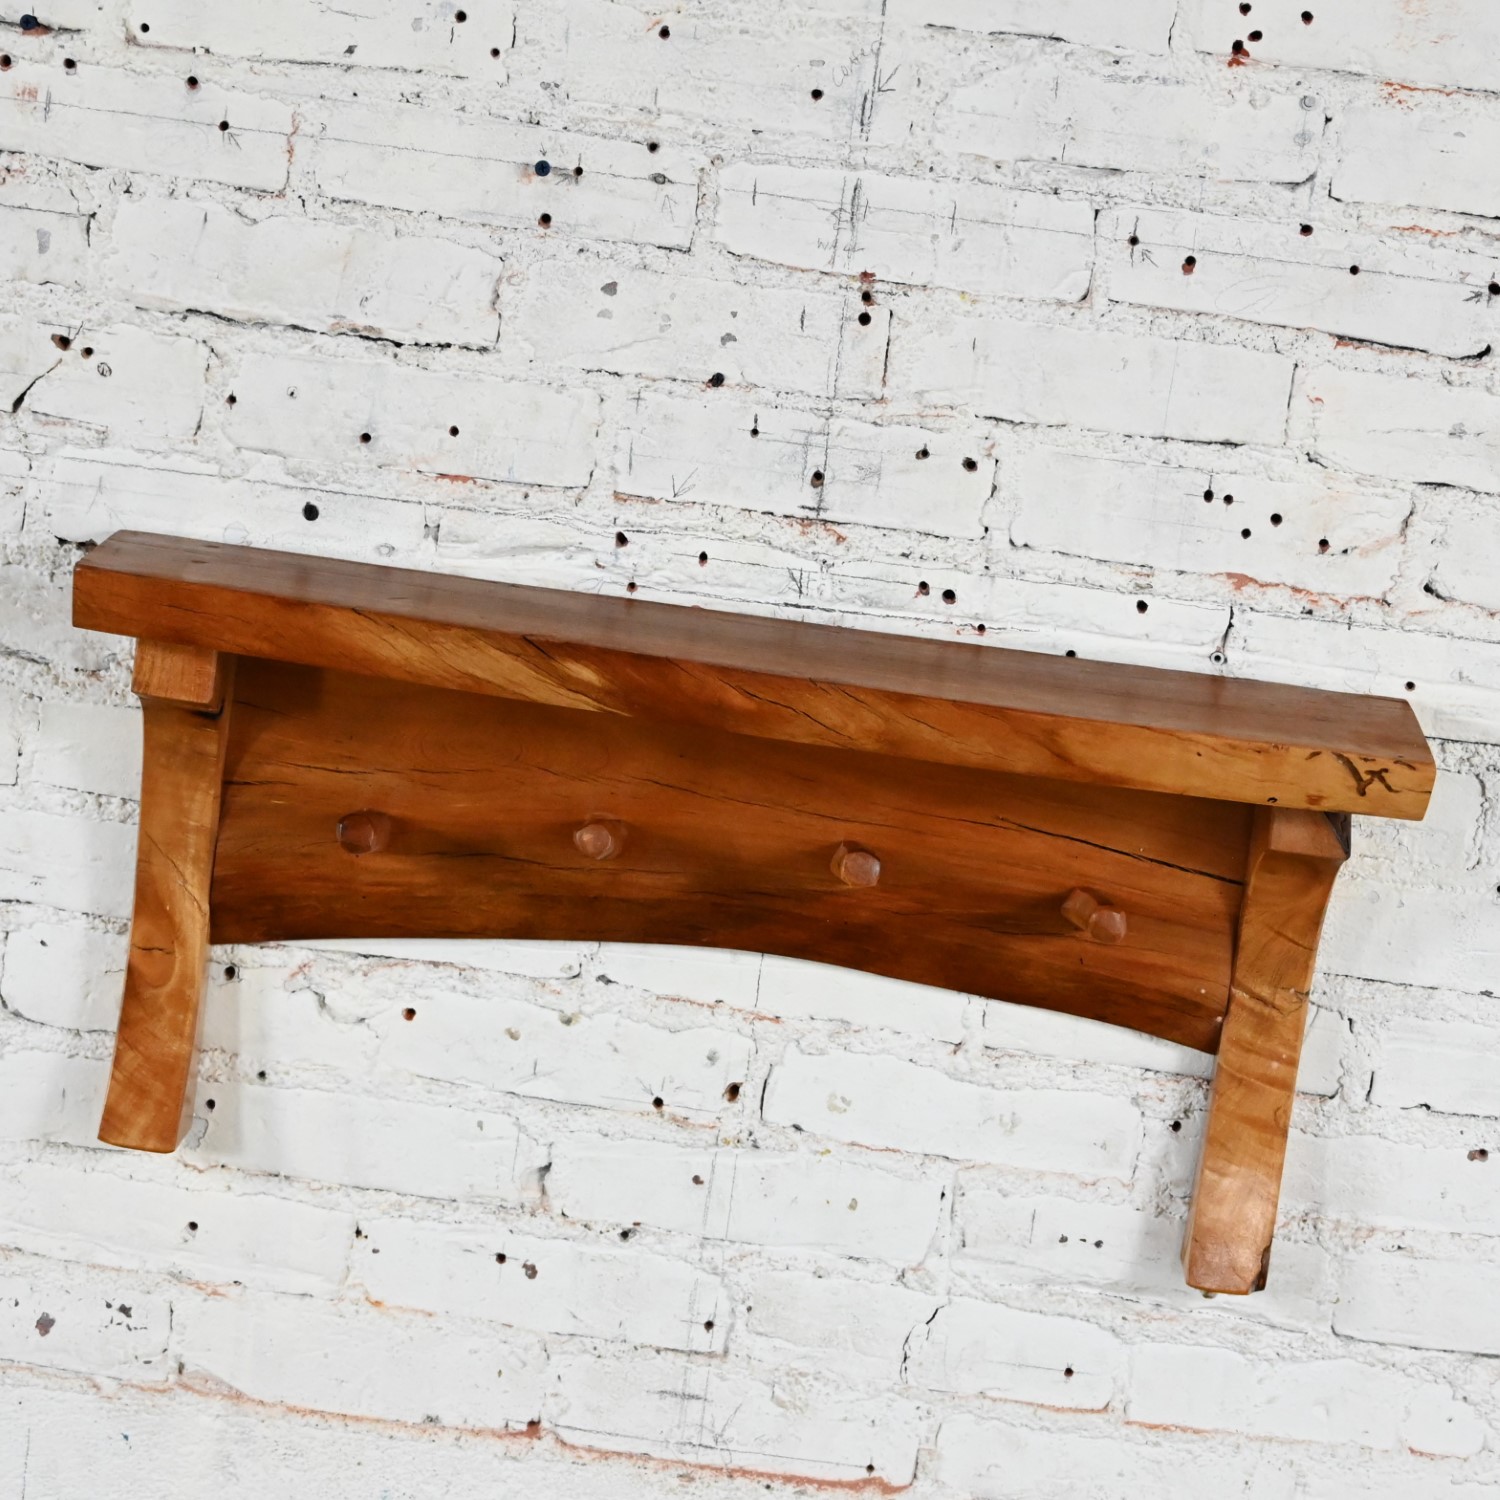 Late 20th Century Folk Art Organic Modern Rustic Natural Edge Wood Slab Wall Shelf with Pegs